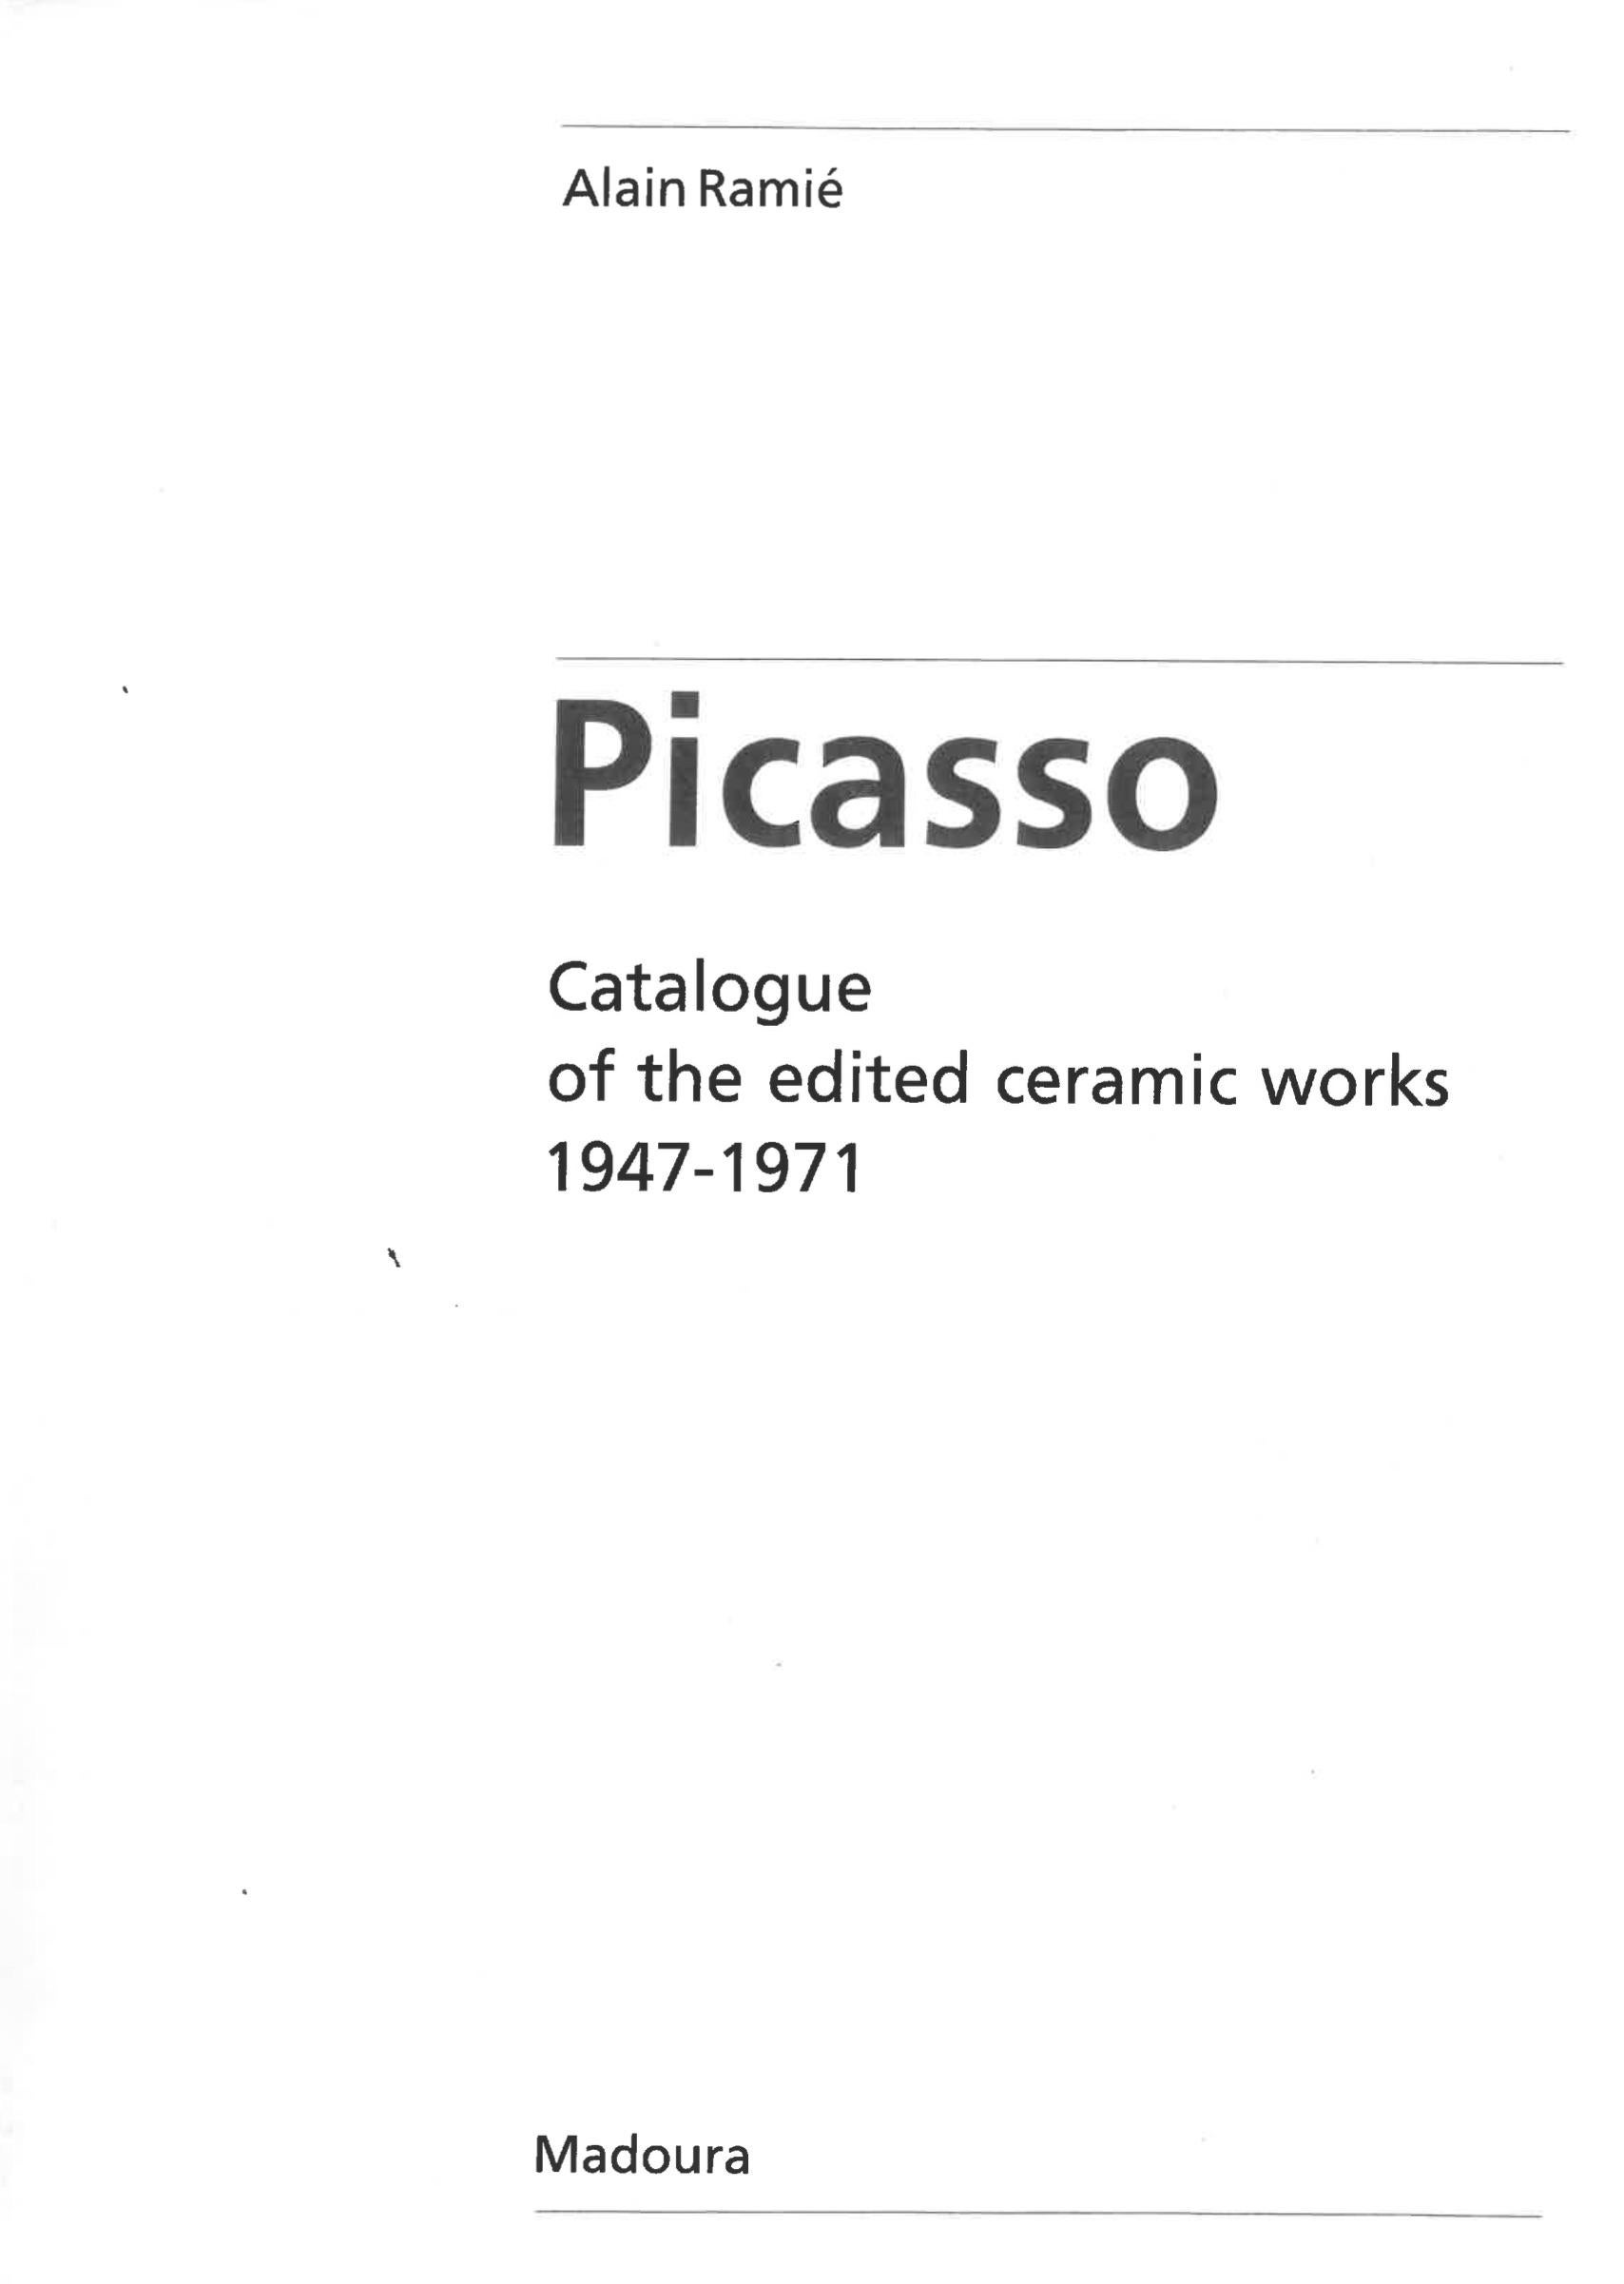 did picasso sculpt